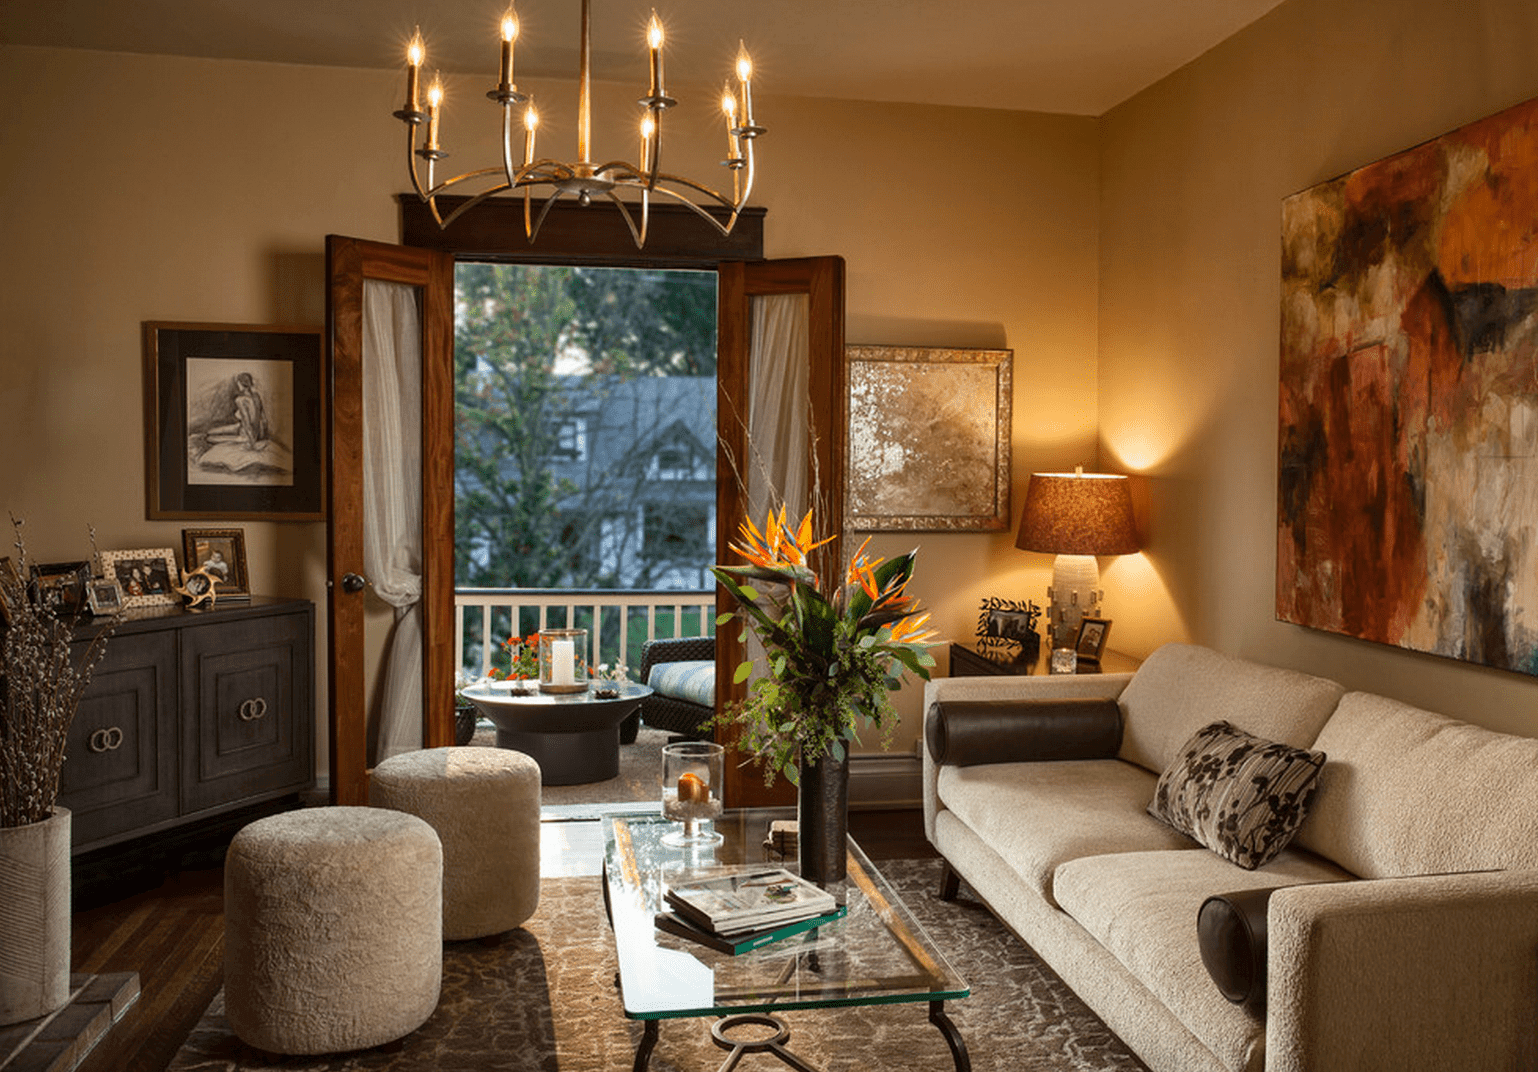 Some Amazing Home Decor Ideas To Make Your Living Room A ...